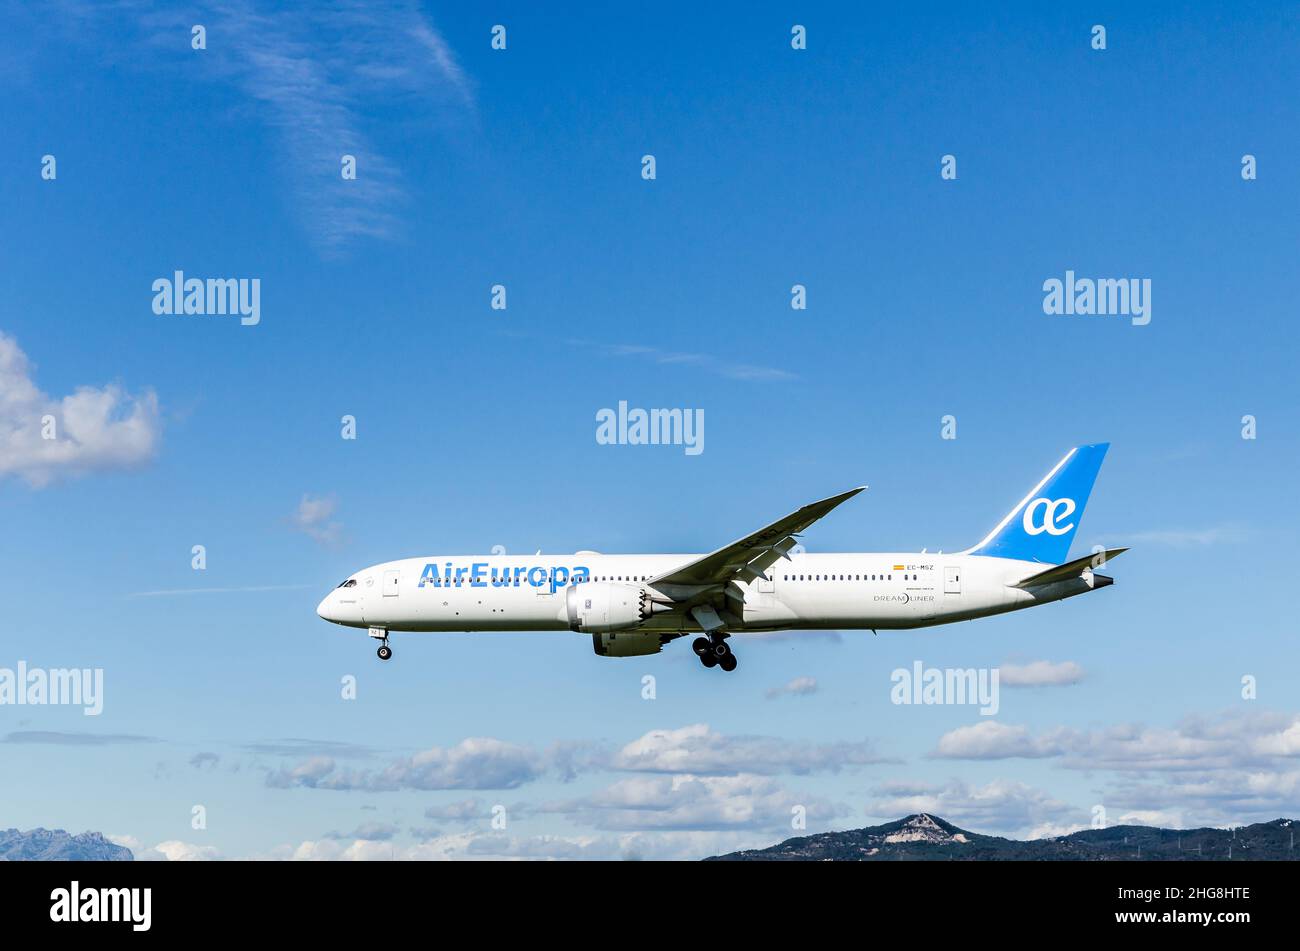 Barcelona, Spain; November 1, 2021: Boeing 787 airplane of the airline Air Europa, landing at the Josep Tarradellas airport in Barcelona-El Prat Stock Photo